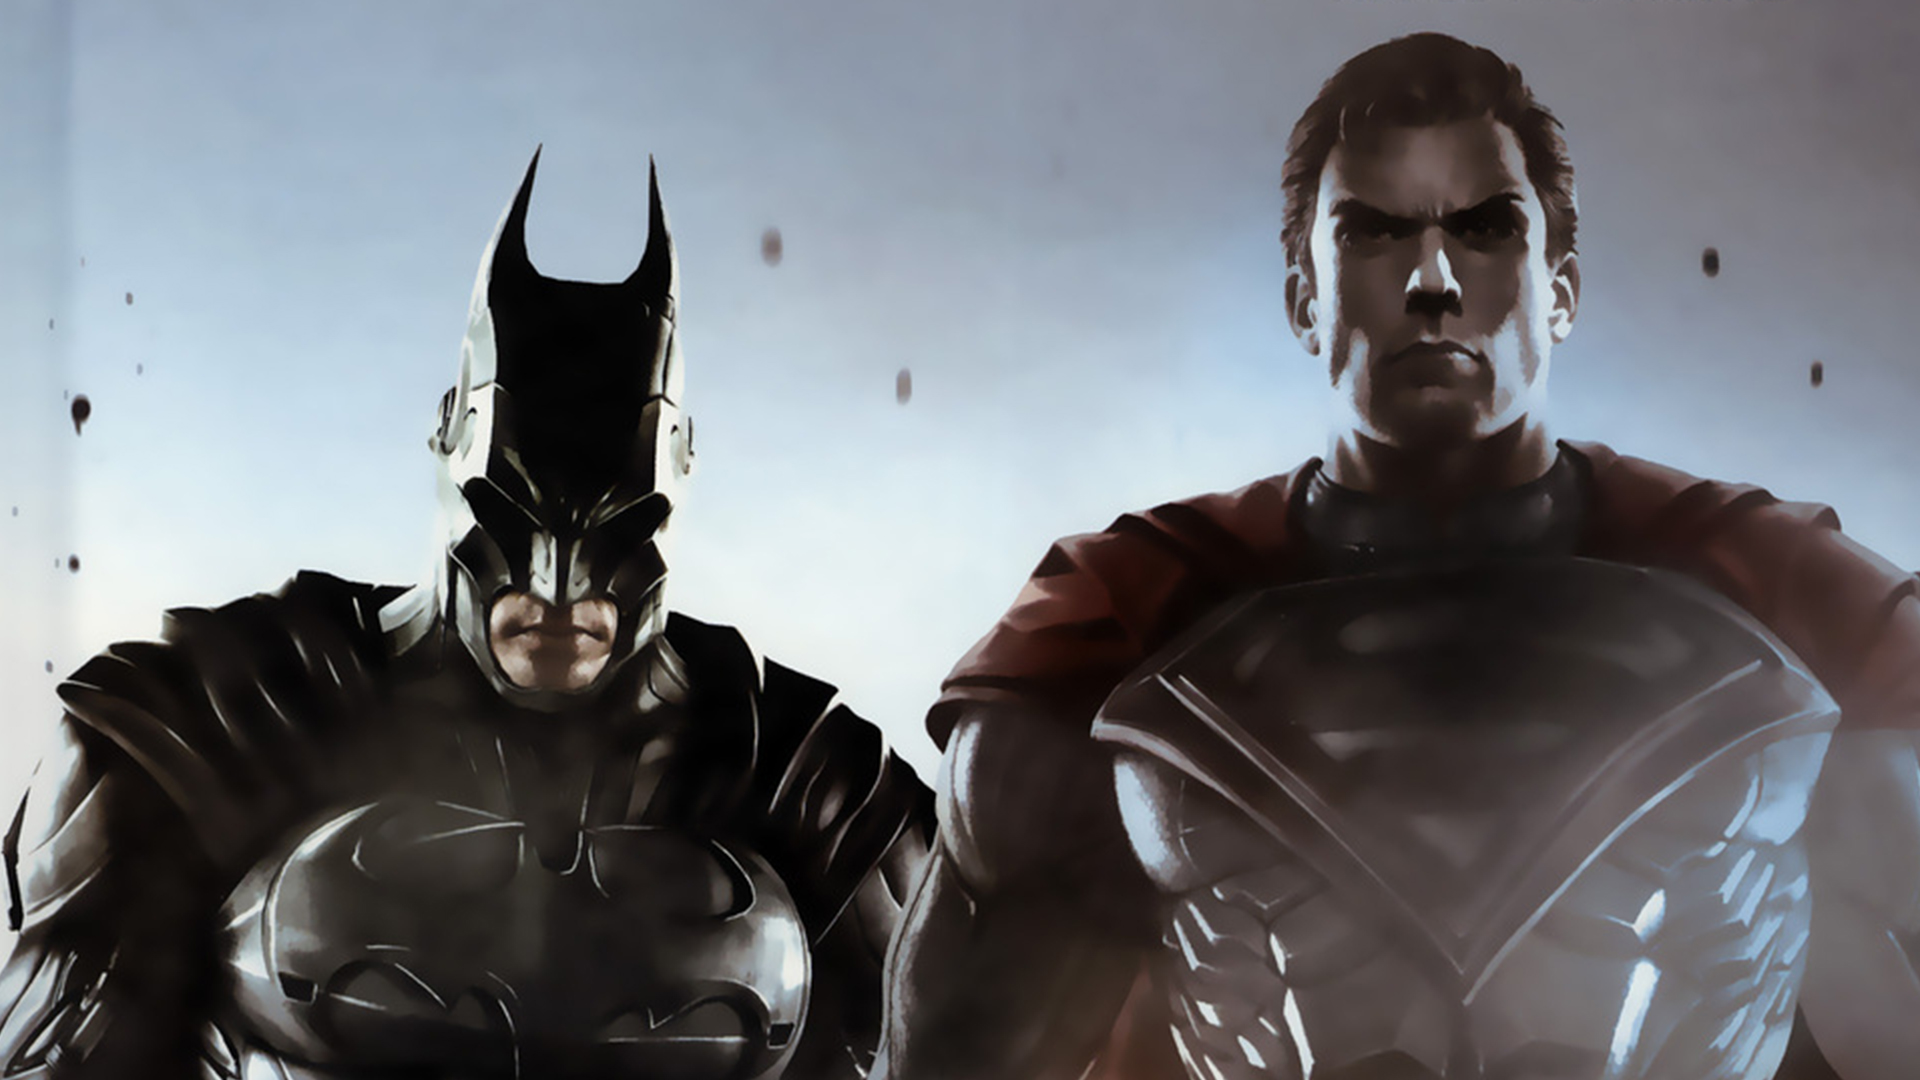 Descarga gratuita de fondo de pantalla para móvil de Superhombre, Videojuego, Hombre Murciélago, Injustice: Gods Among Us.